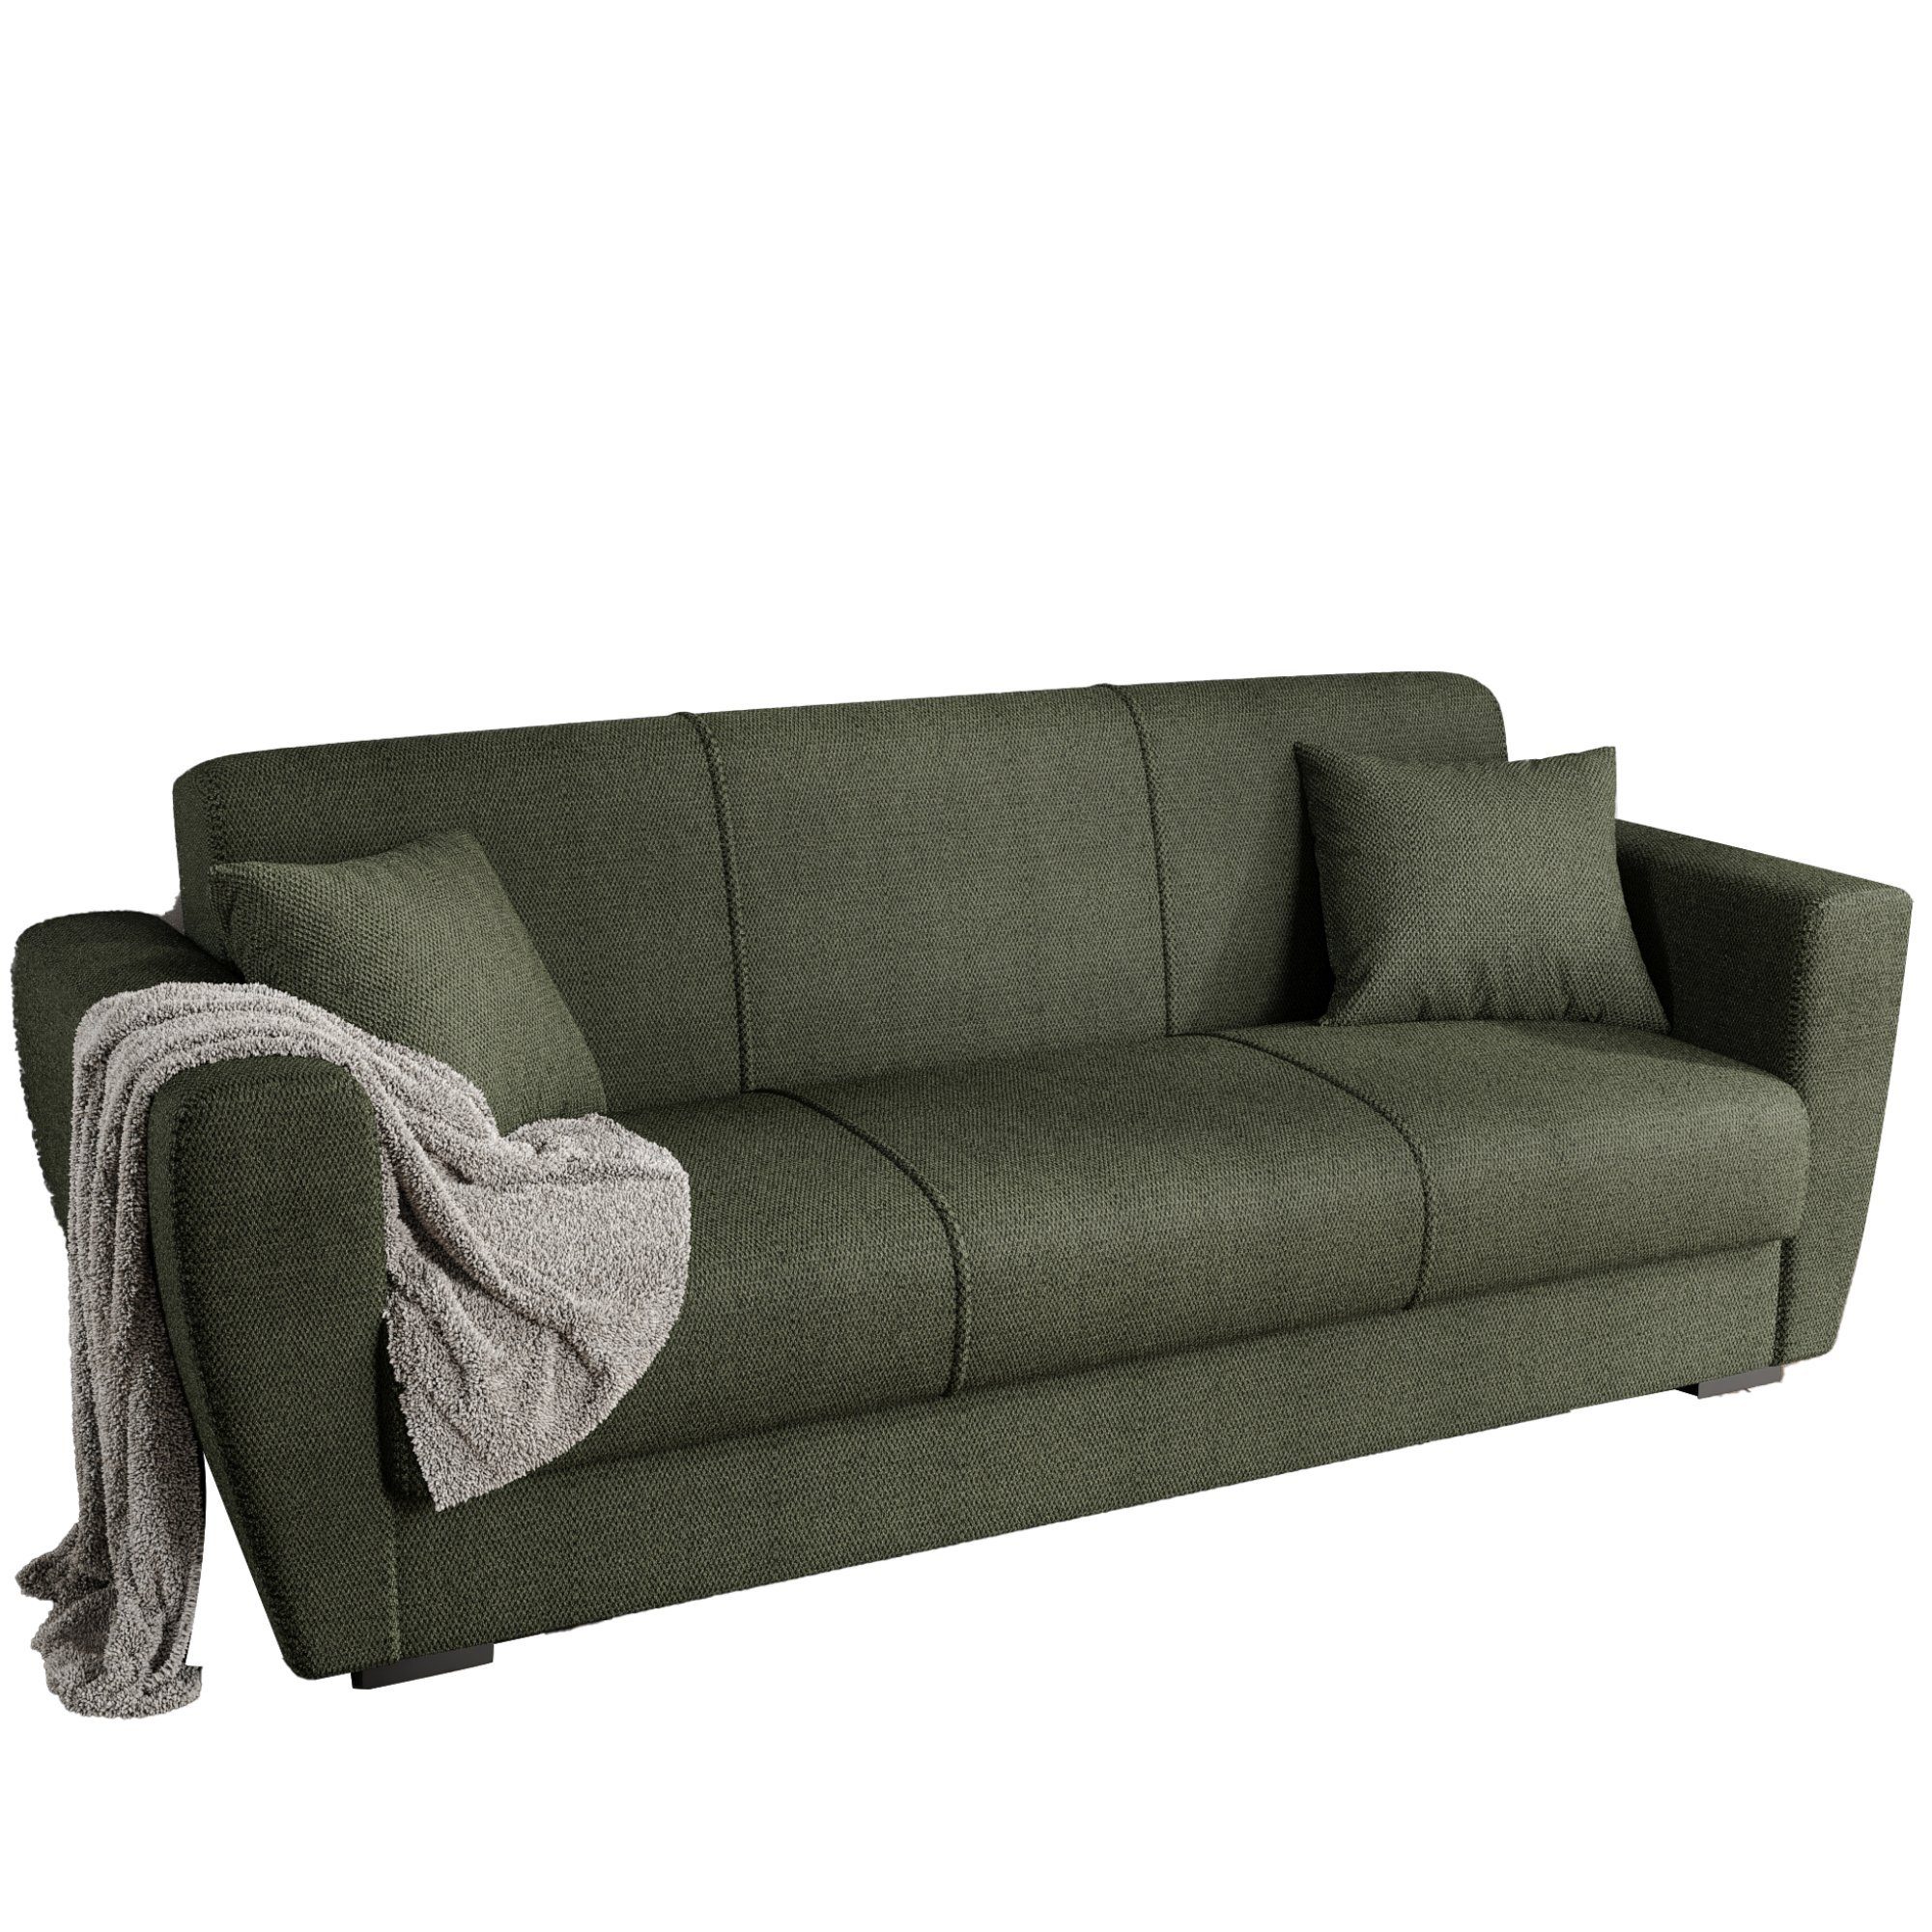 Gozos Sofa Gozos 85 Sitzer, 3 x x Series Palamos Bettfunktion 86 Grün Leinenoptikstoff, cm Couch 221